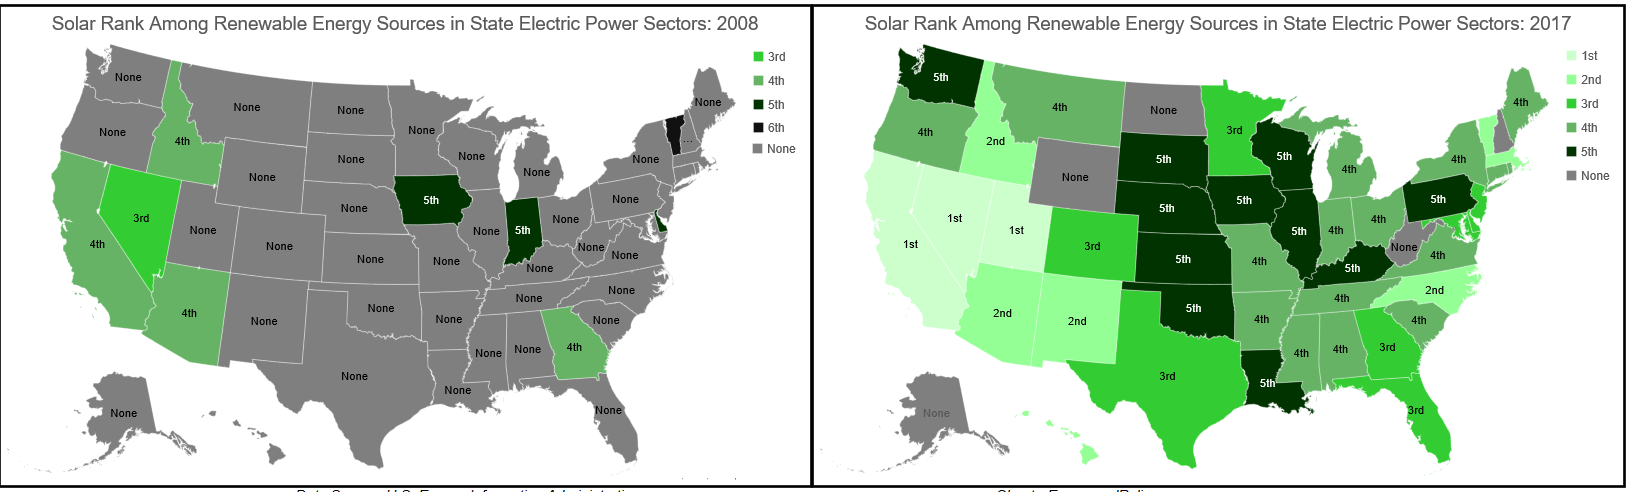 solar power, renewable energy, map, electric power sector